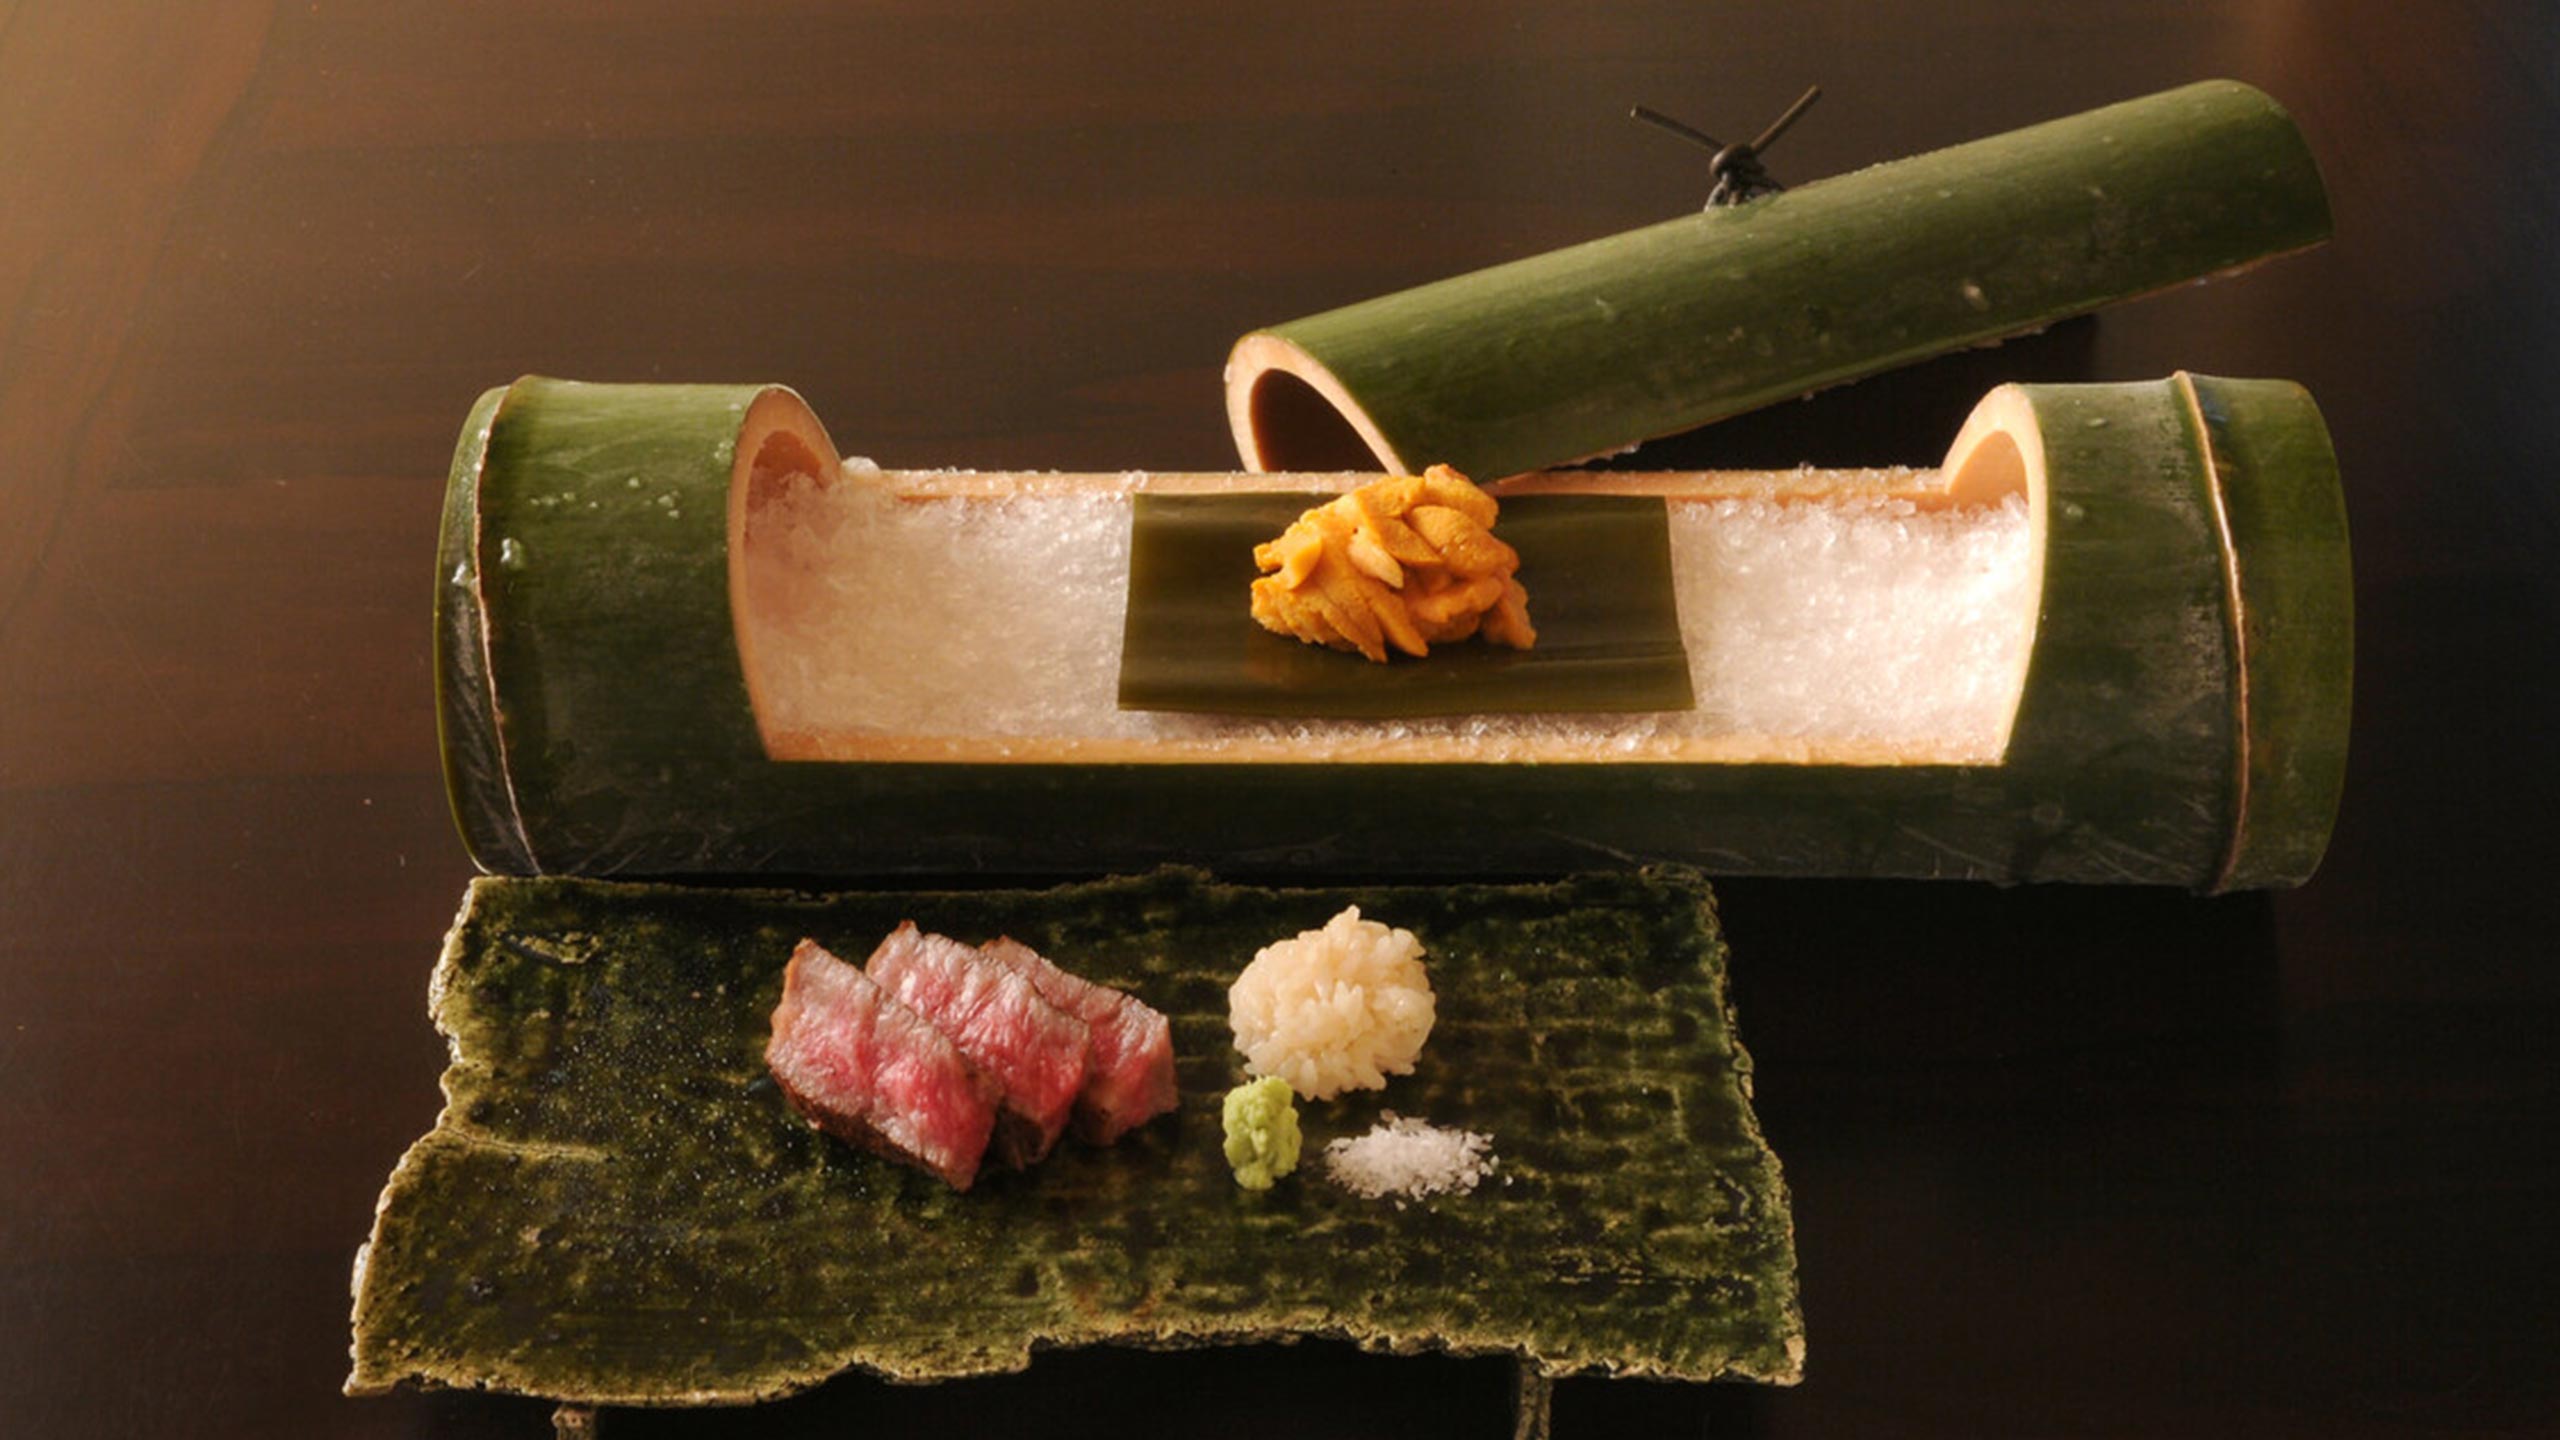 kanamean-nishitomiya-kyoto-japan-food-in-bamboo